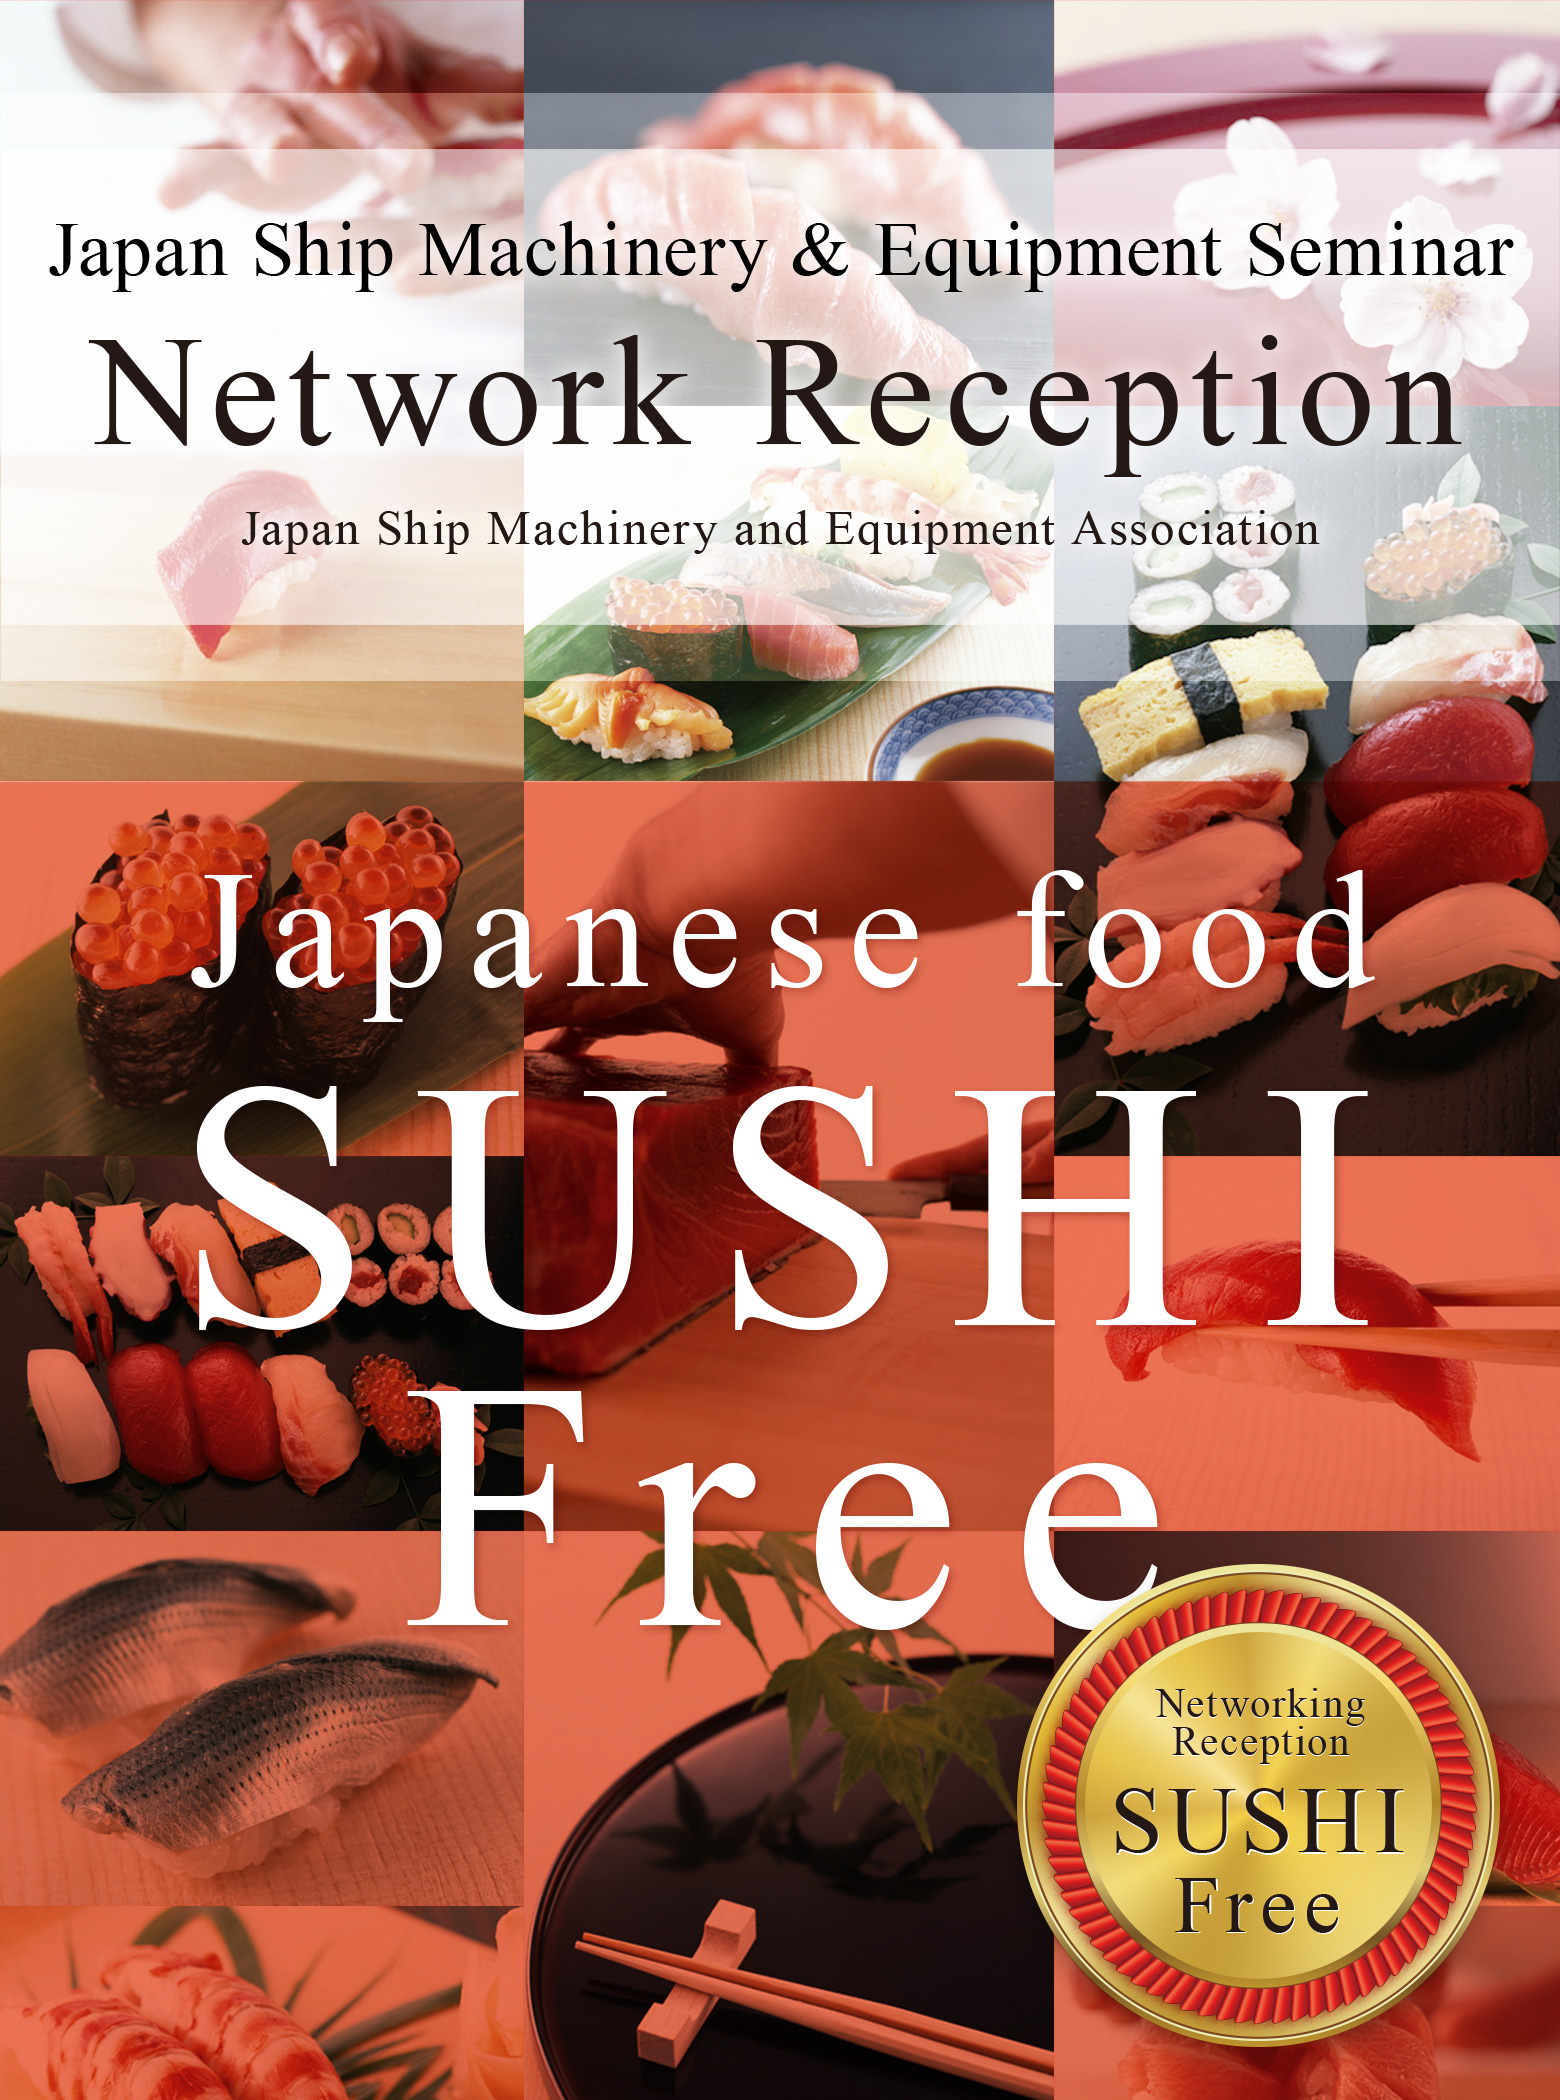 Network Reception Japanese food SUSHI Free